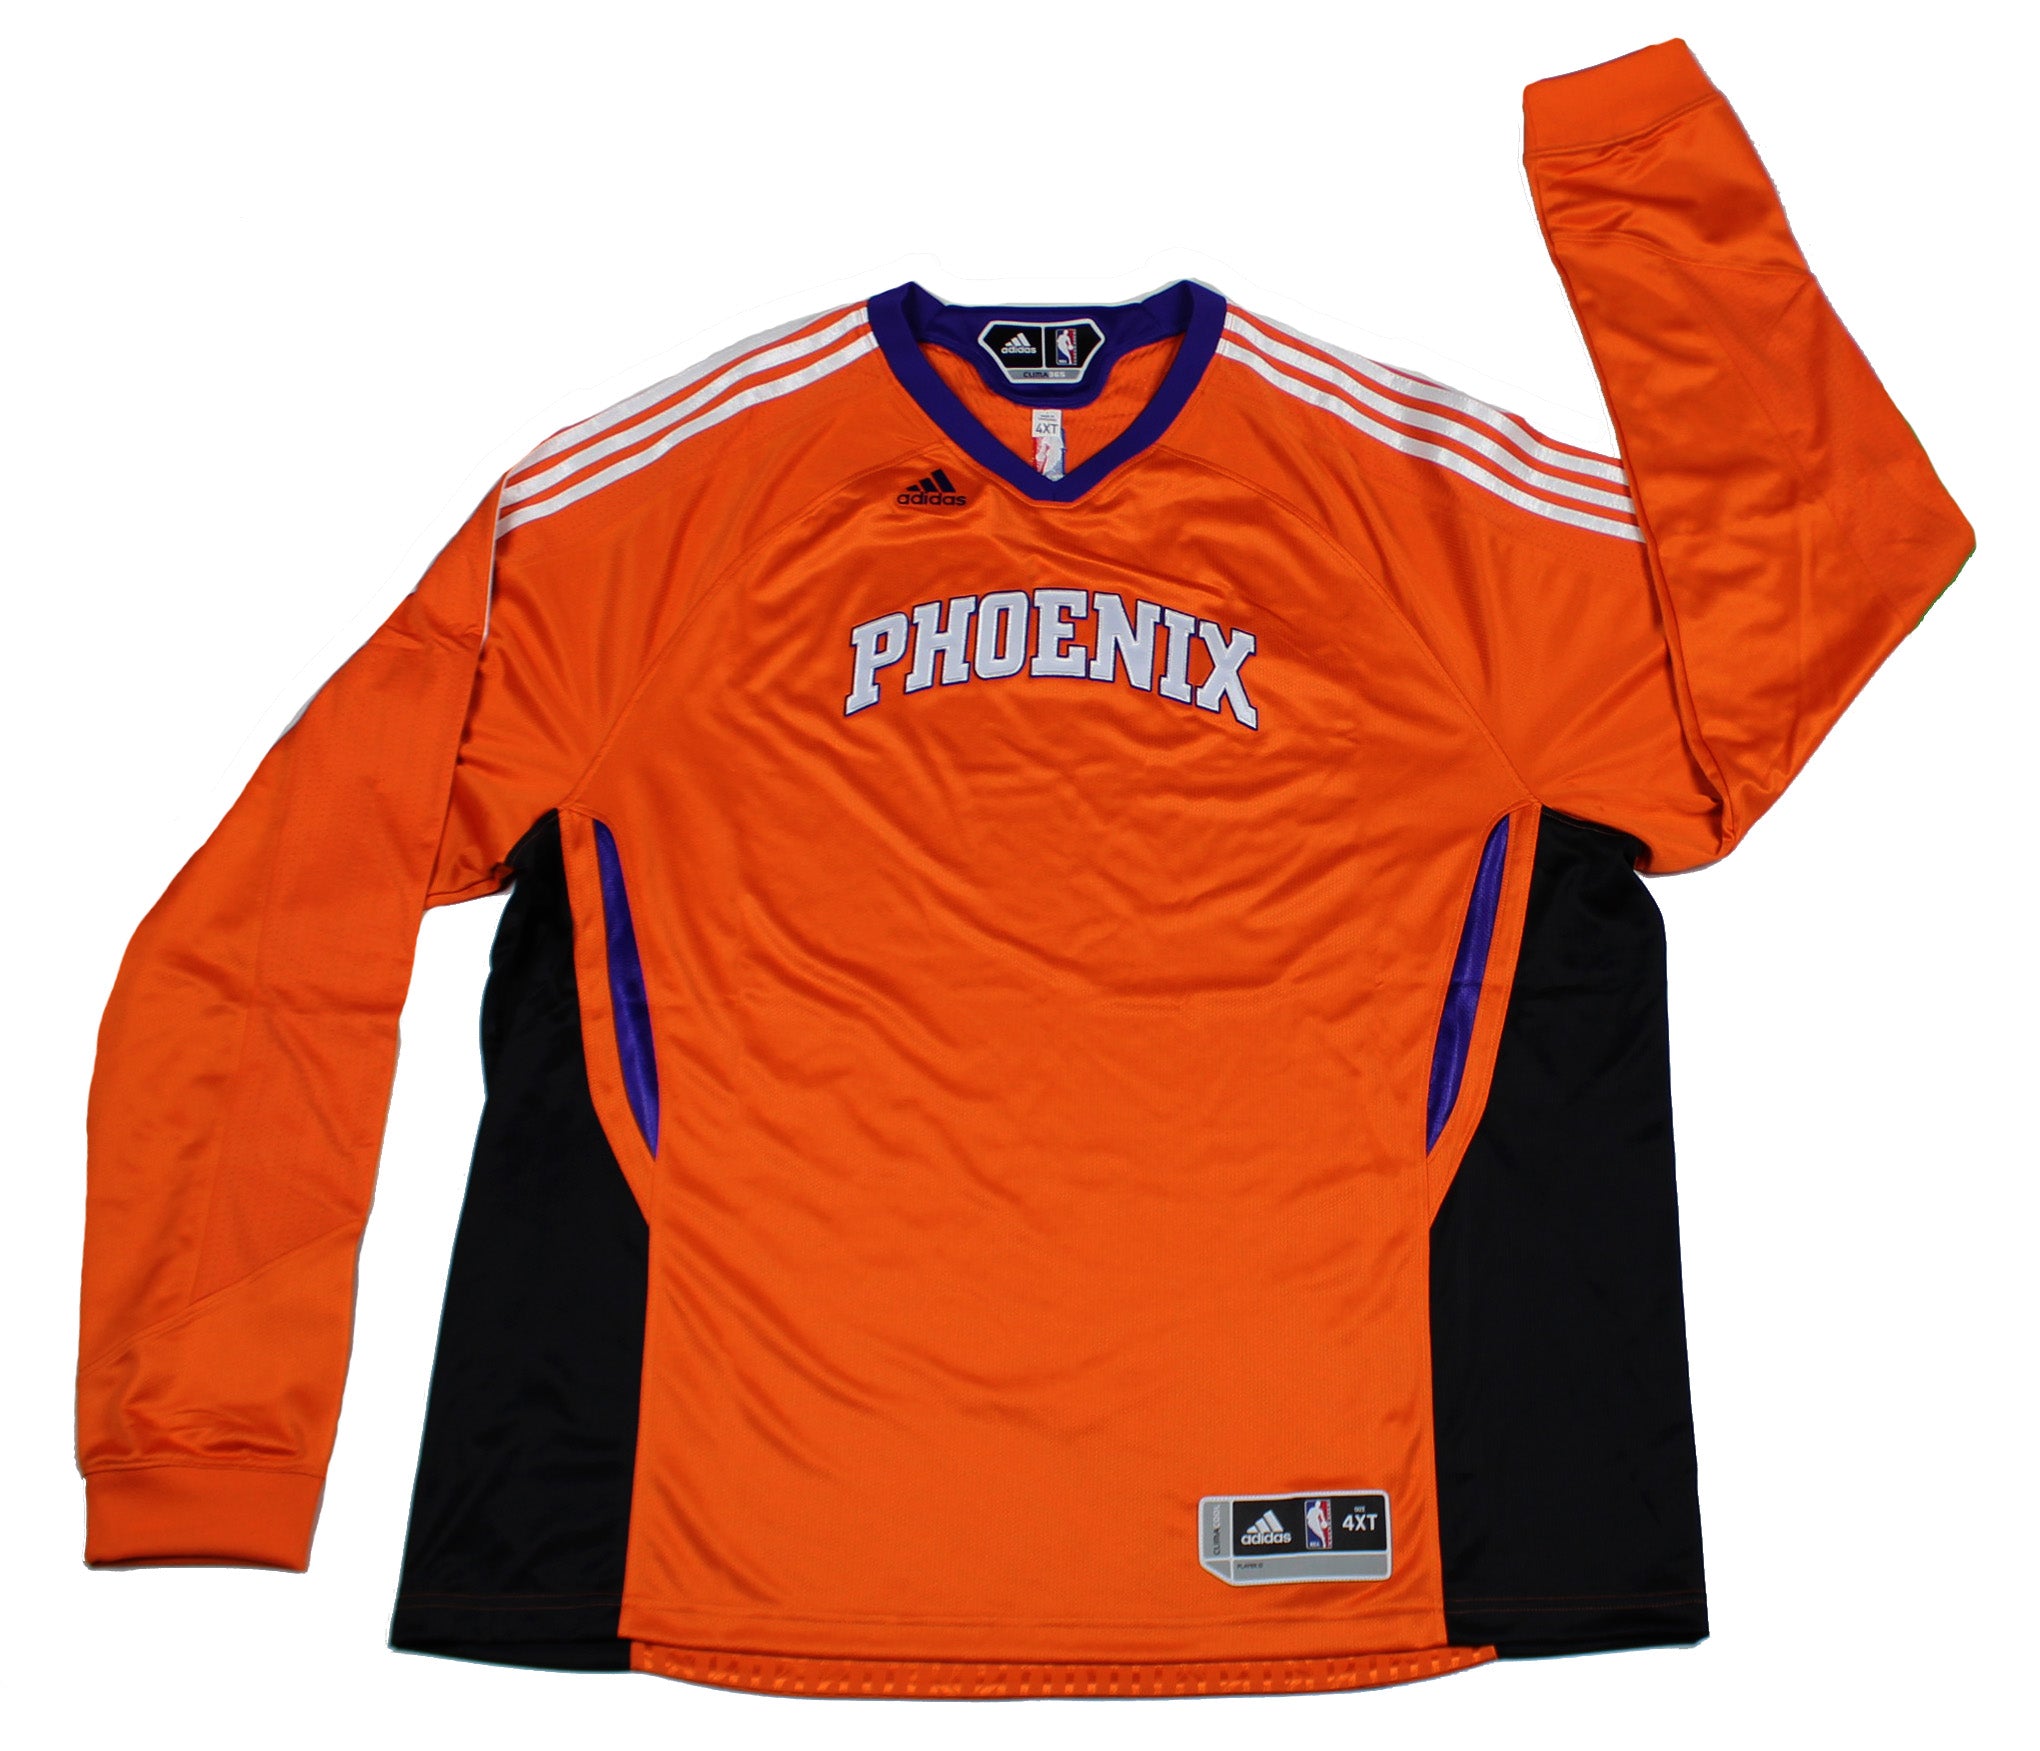 Adidas NBA Men's Phoenix Suns Blank Basketball Jersey, Orange